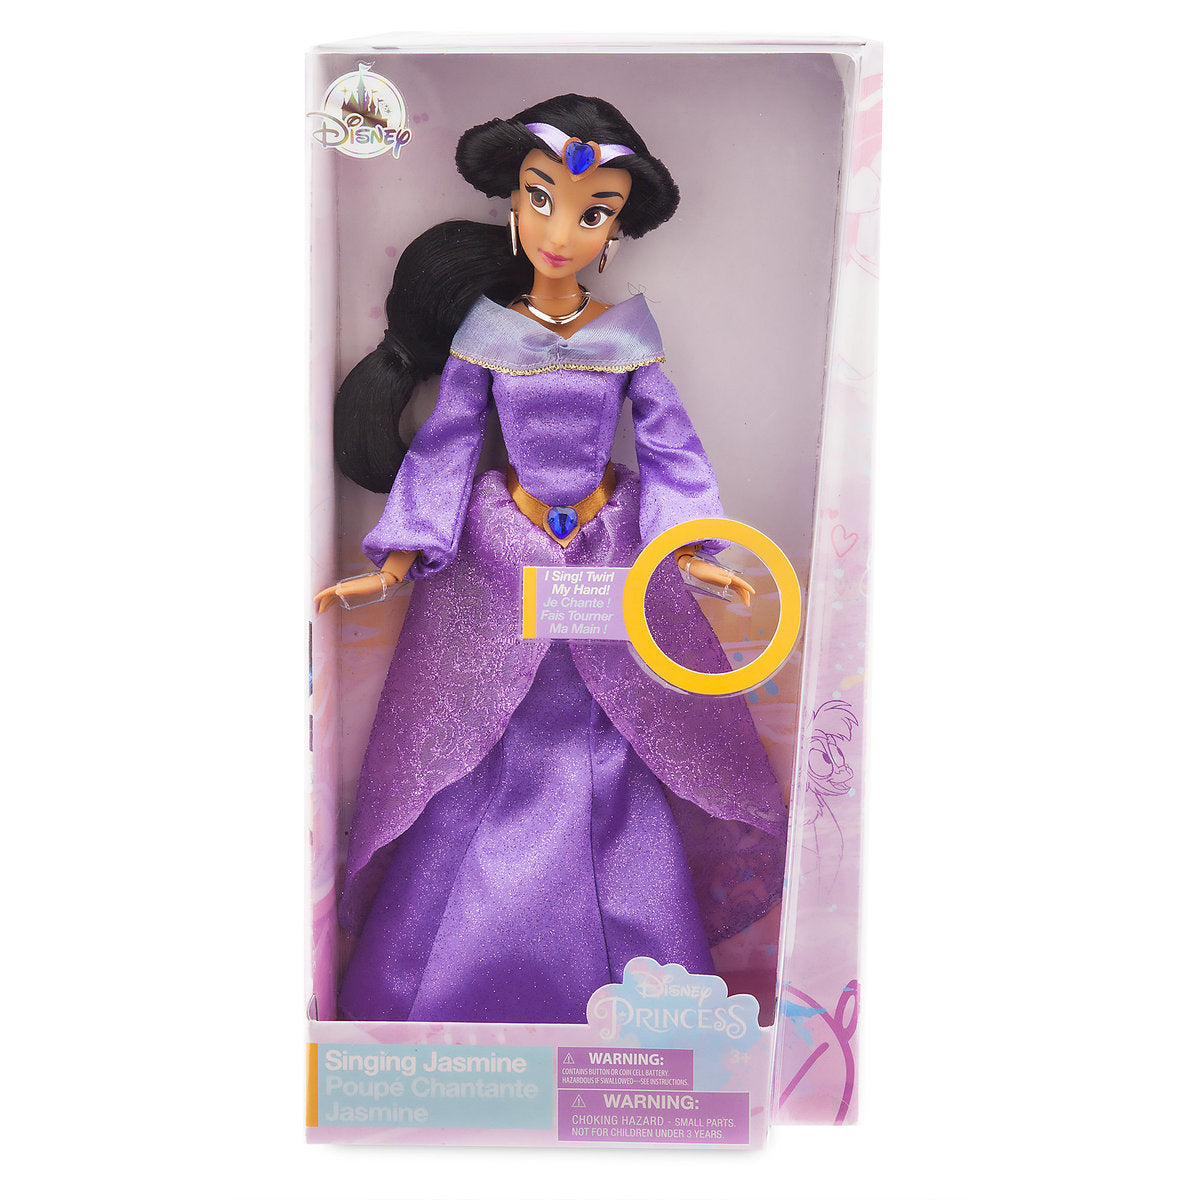 Disney Princess Jasmine Singing Doll A Whole New World New with Box